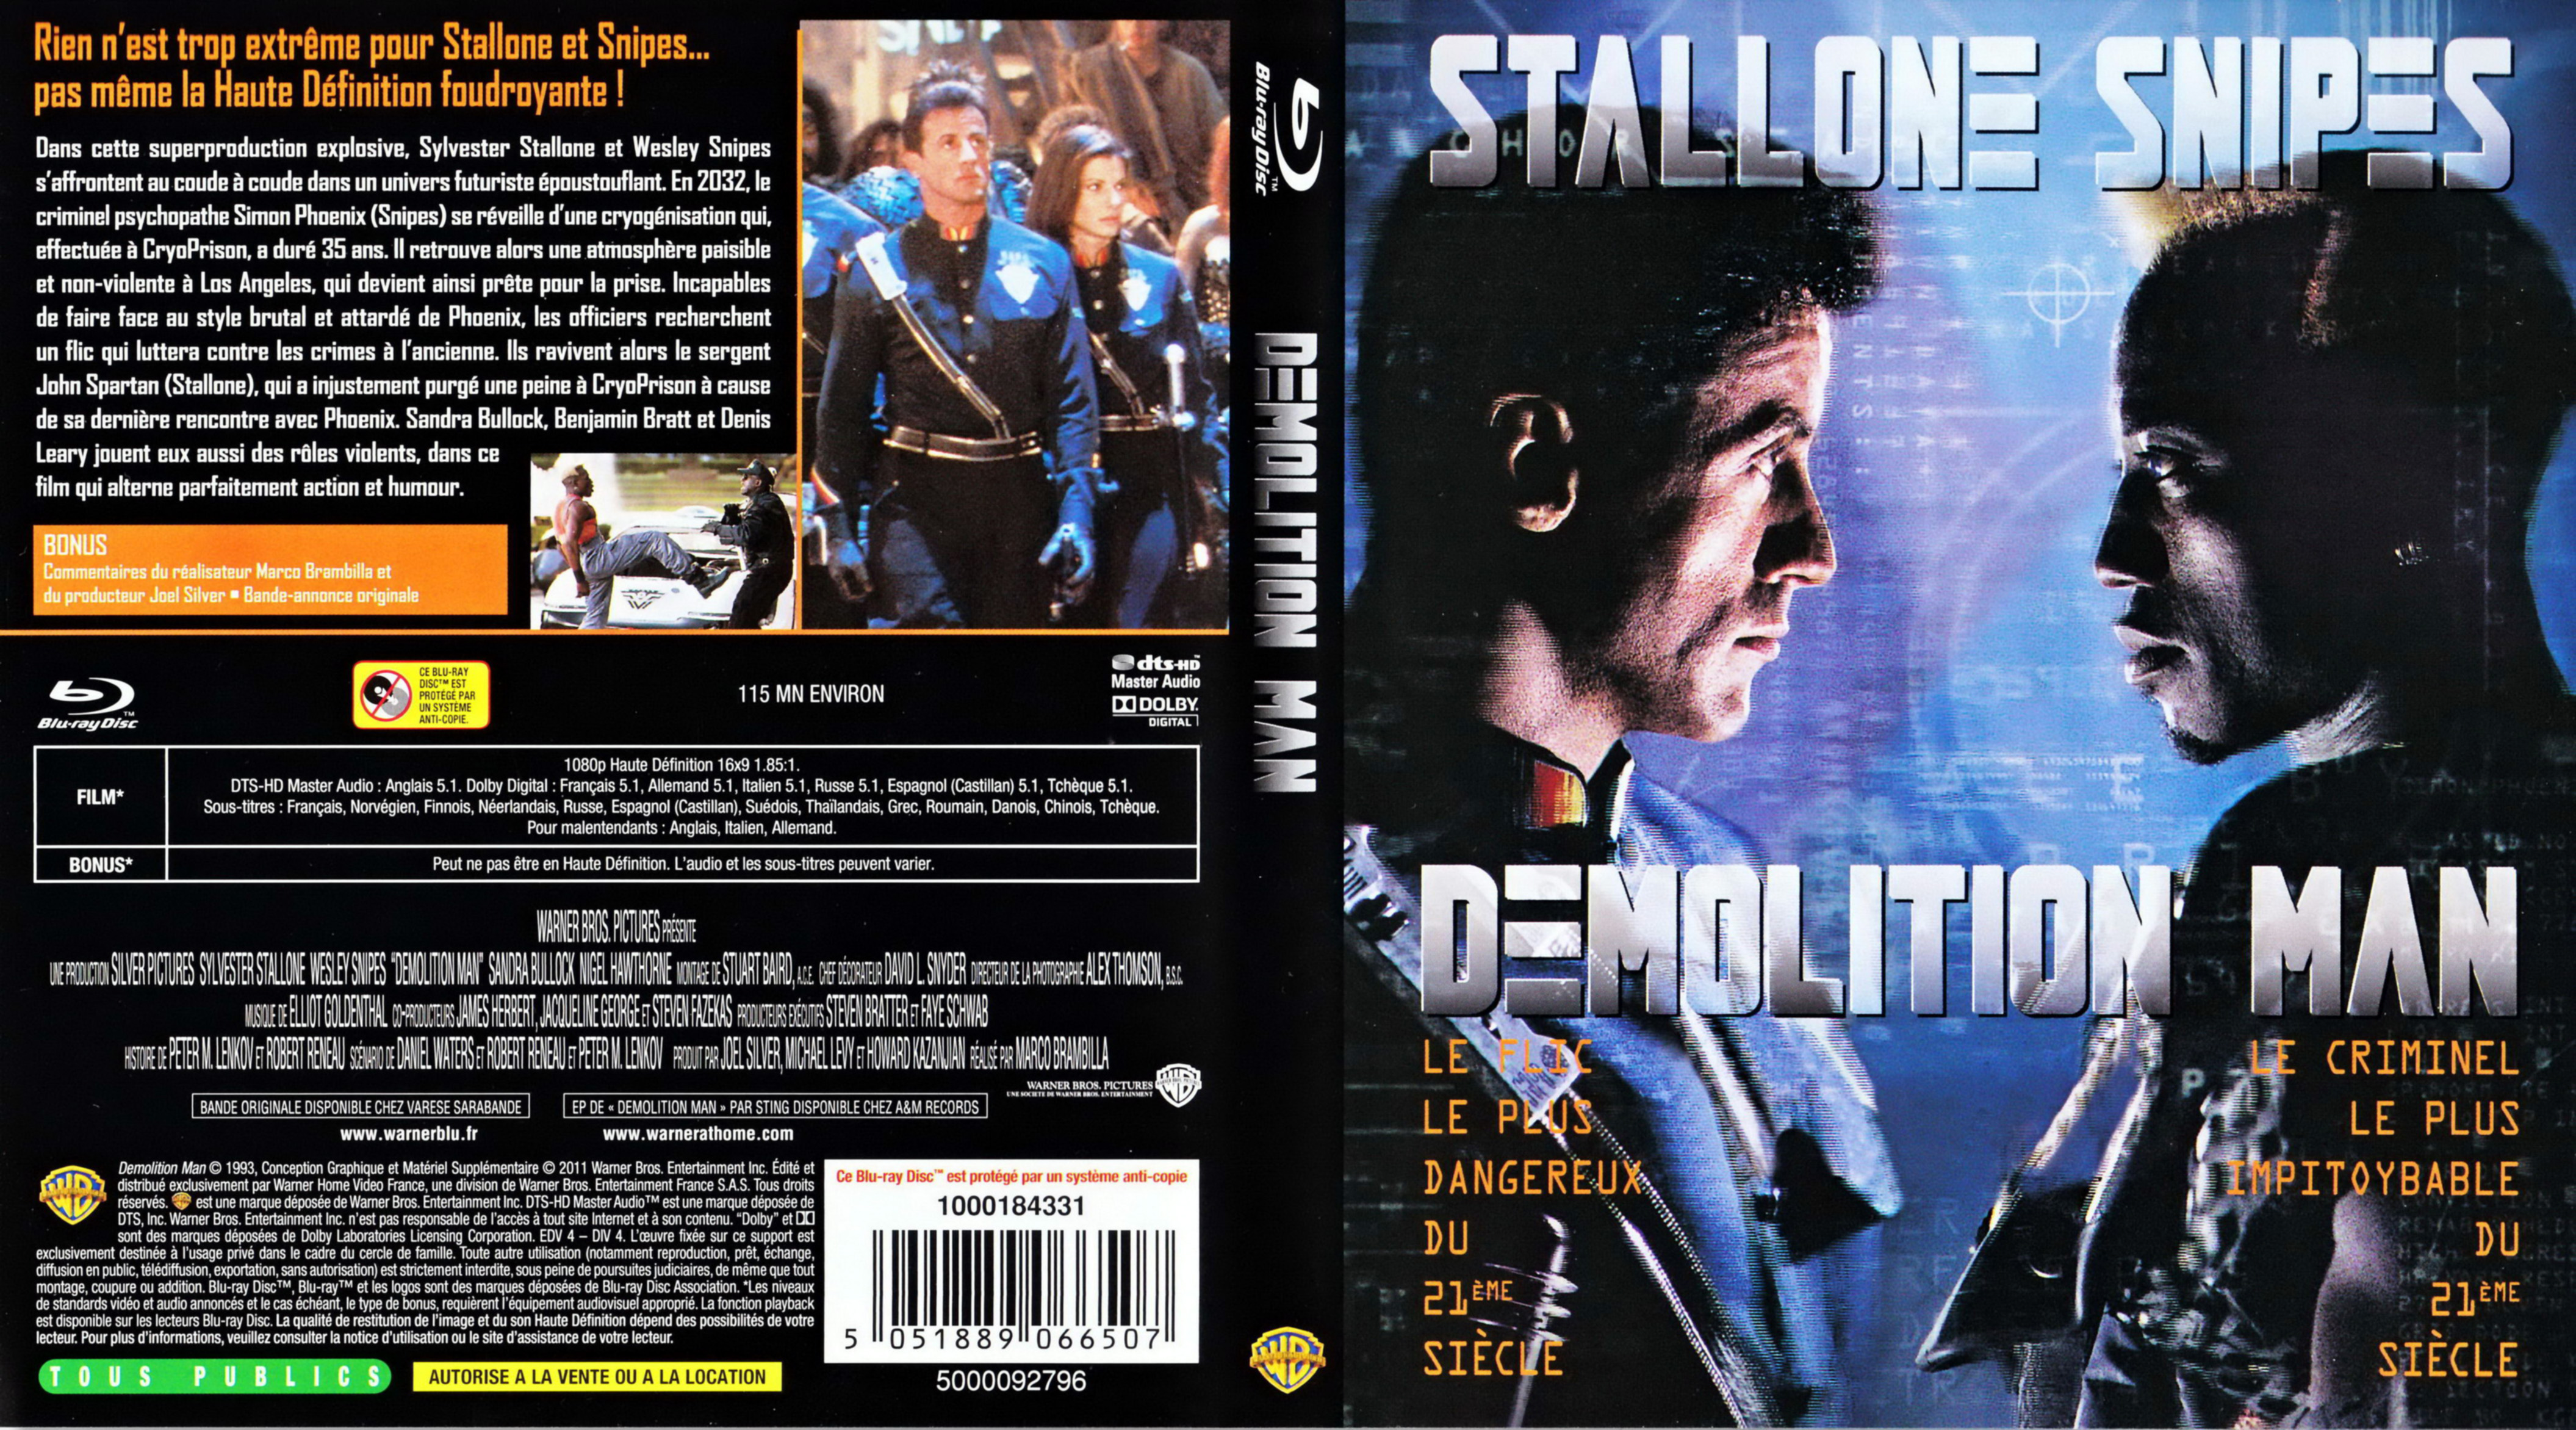 Jaquette DVD Demolition man (BLU-RAY)